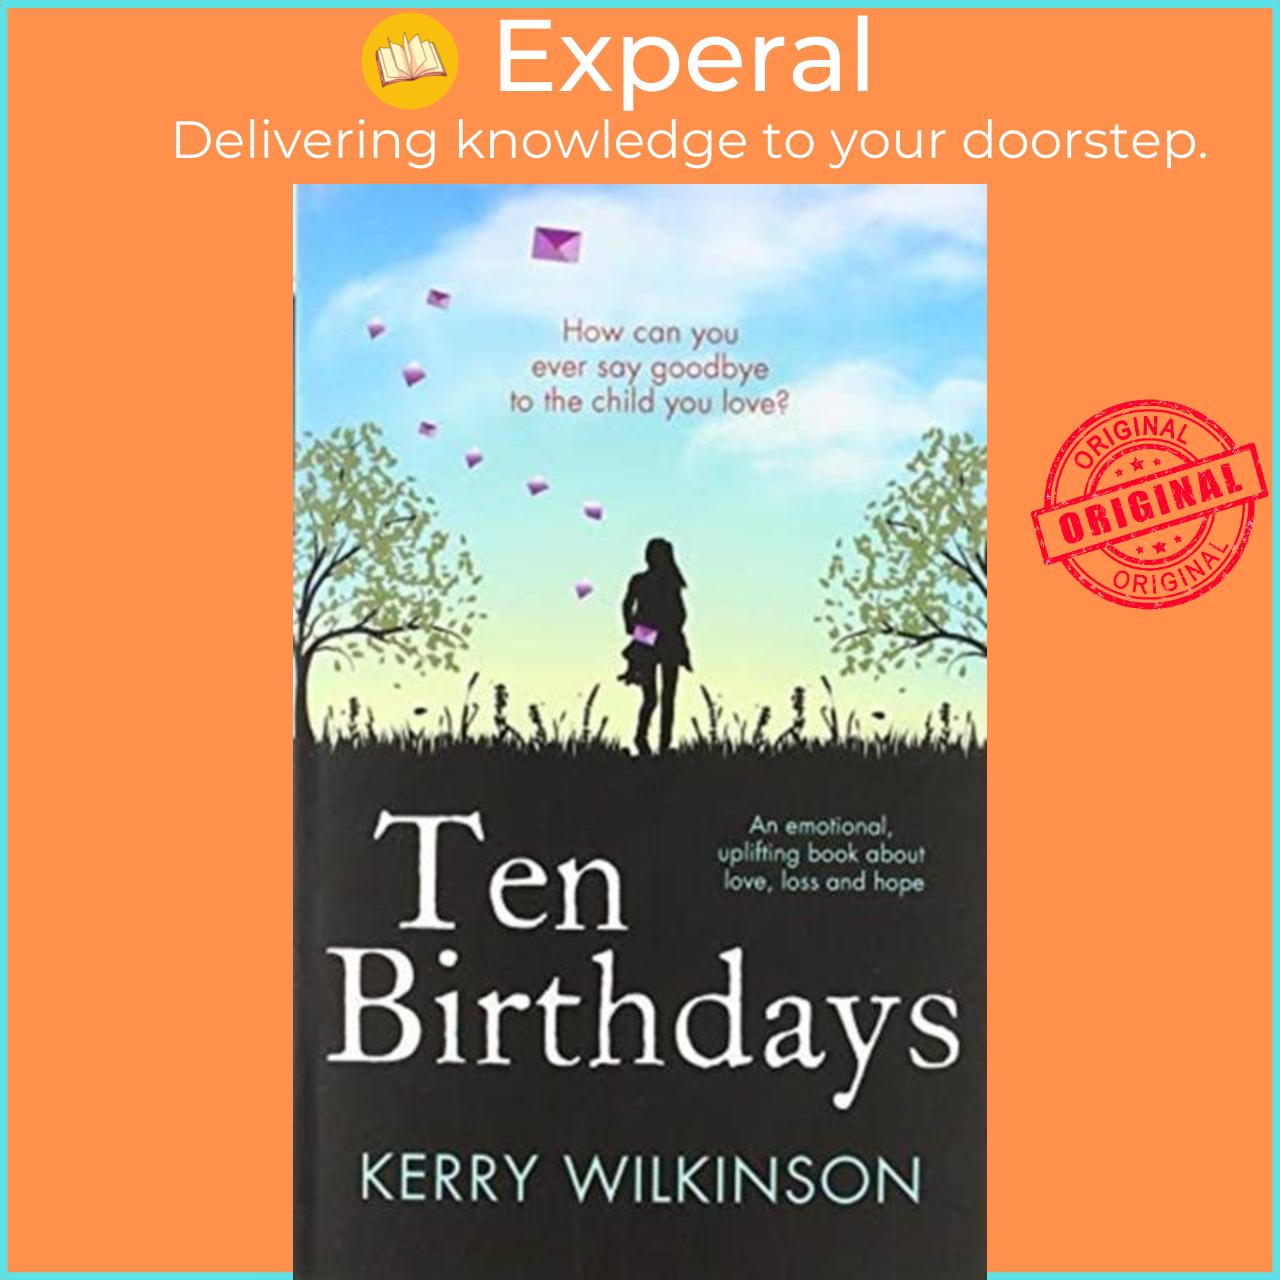 Sách - Ten Birthdays by Kerry Wilkinson (UK edition, paperback)